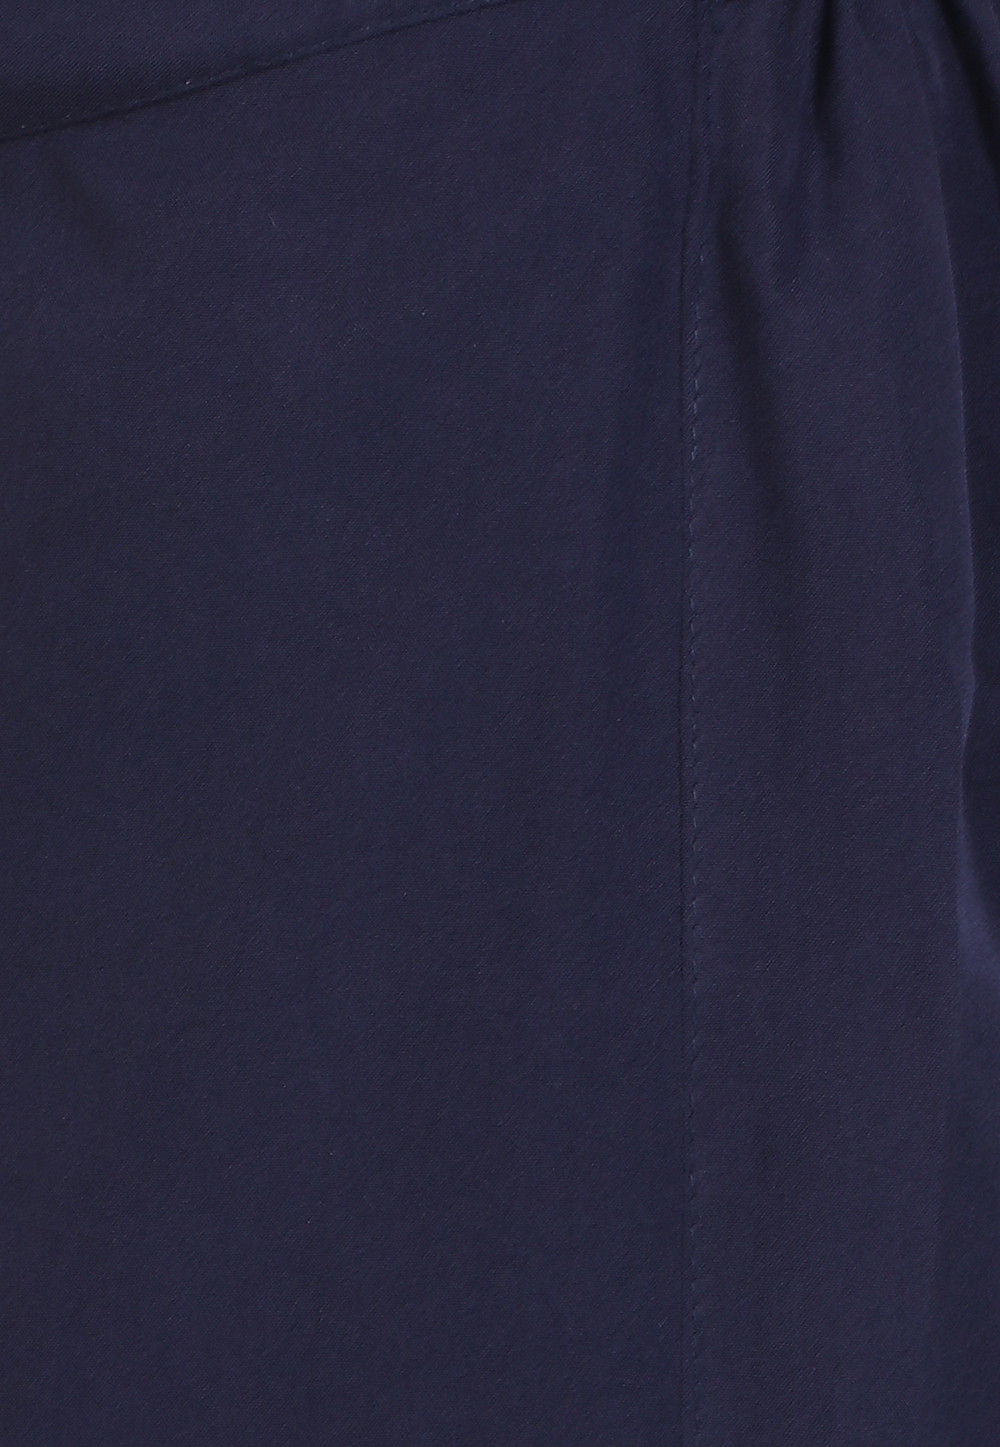 Buy Solid Color Crepe Pant in Navy Blue Online : BYT130 - Utsav Fashion